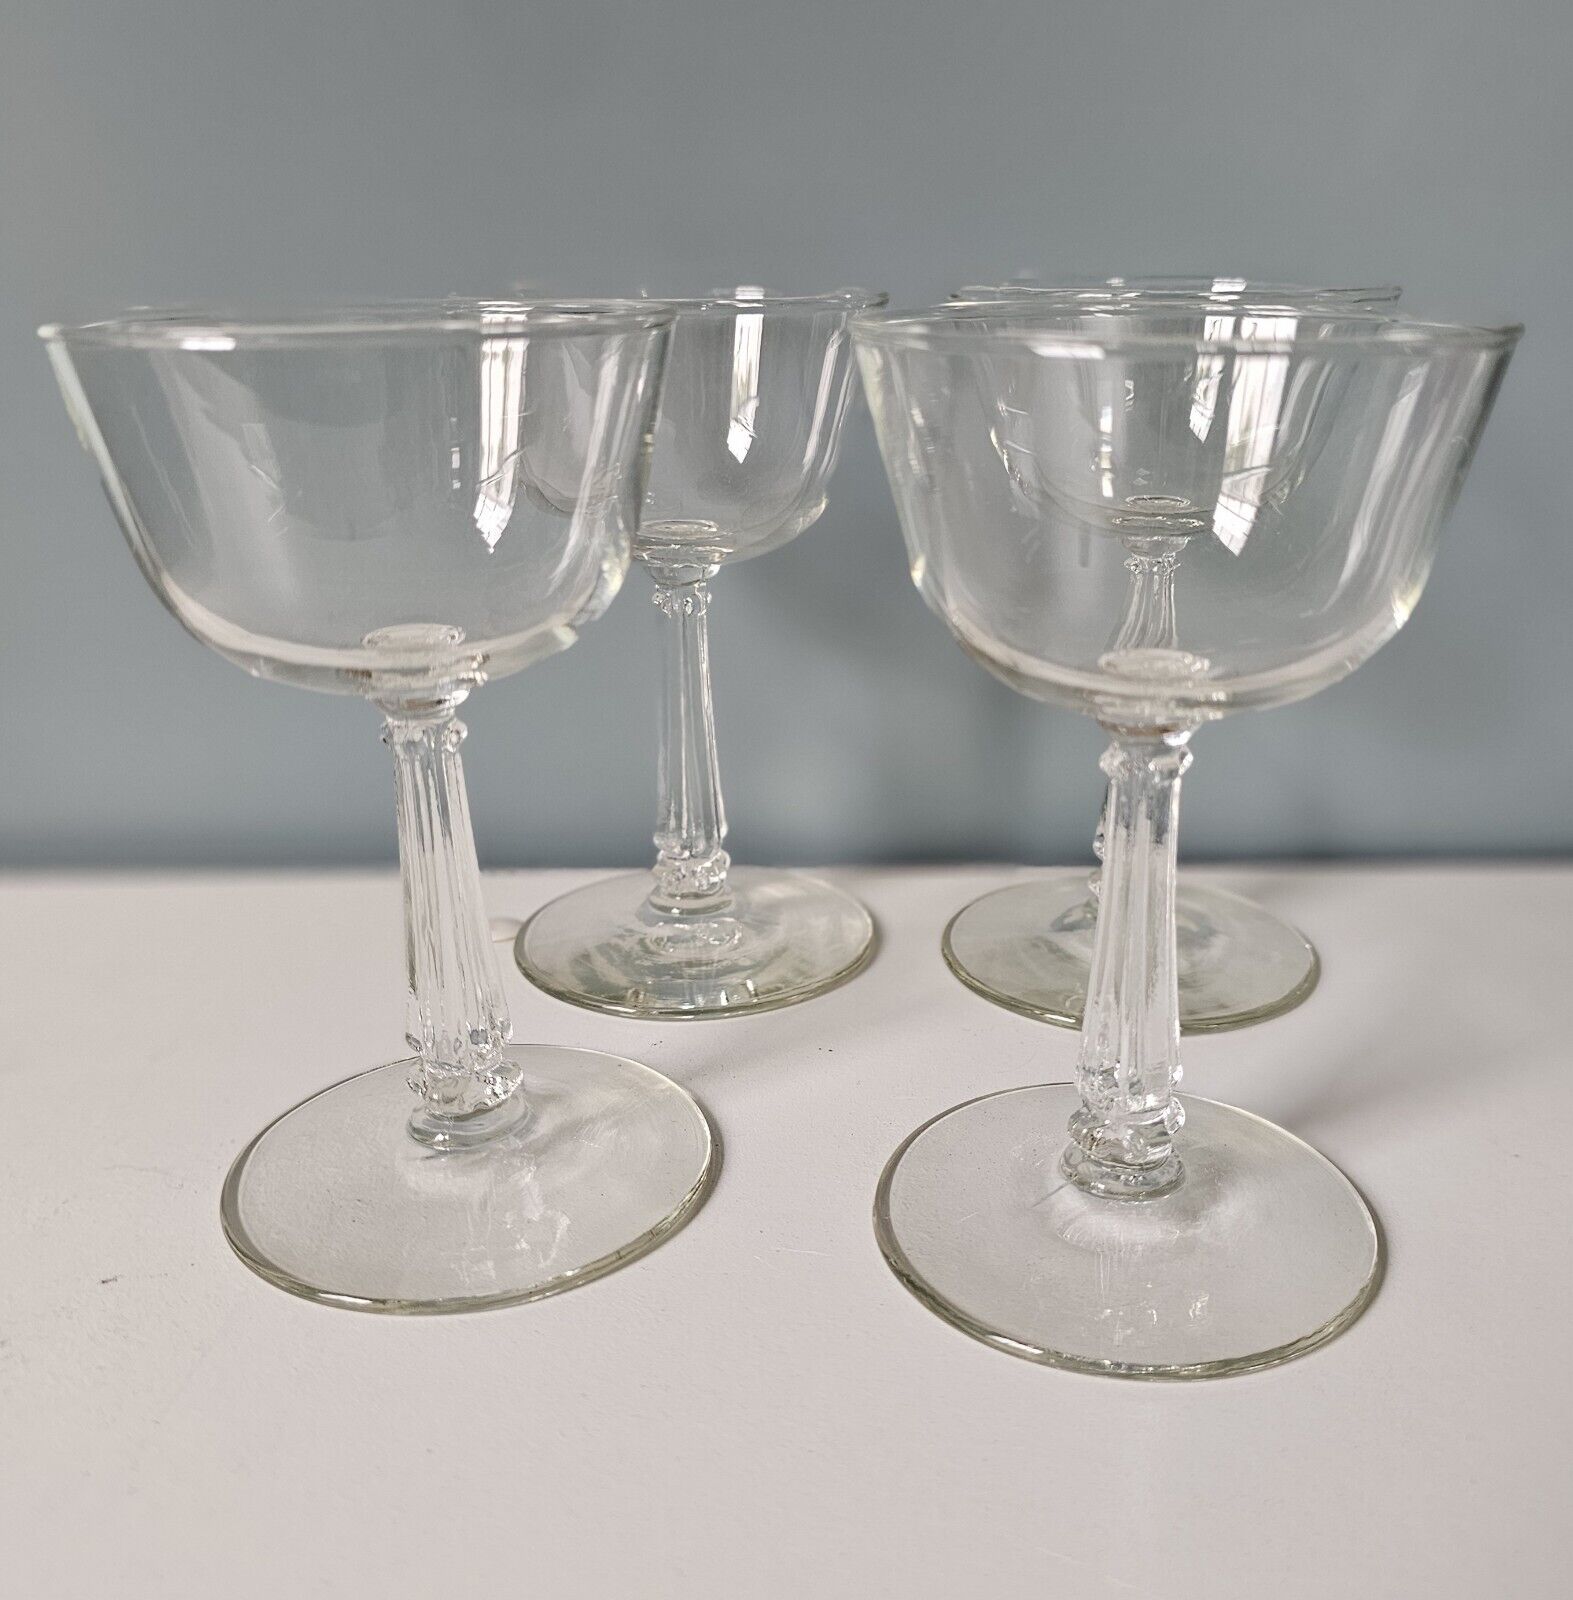 4 Vintage Cordial Liqueur Wine Glasses Clear Cut Glass of 4 XLNT COND